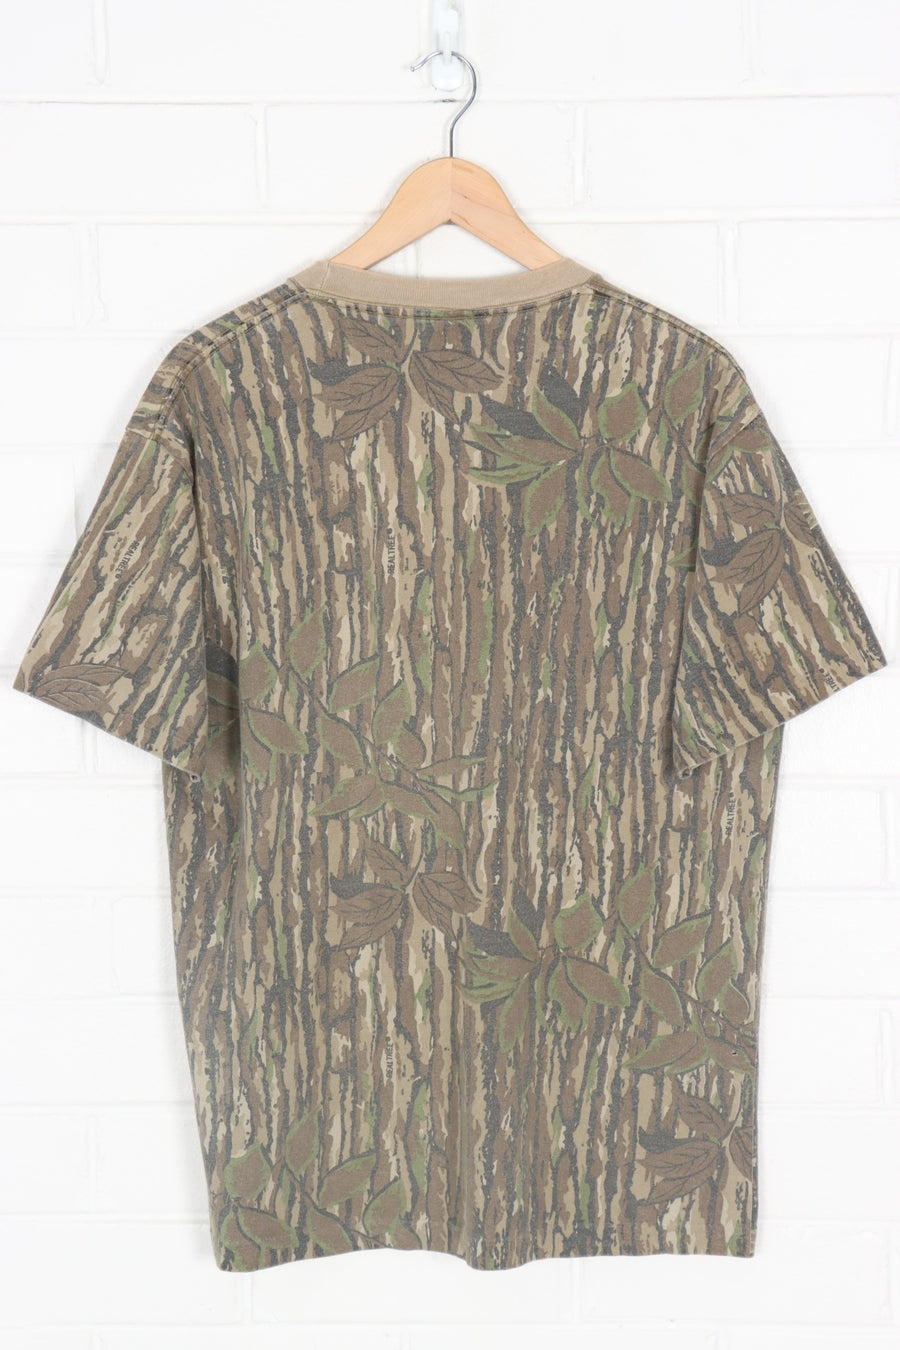 REALTREE Camo Hunting Sports T-Shirt (L)